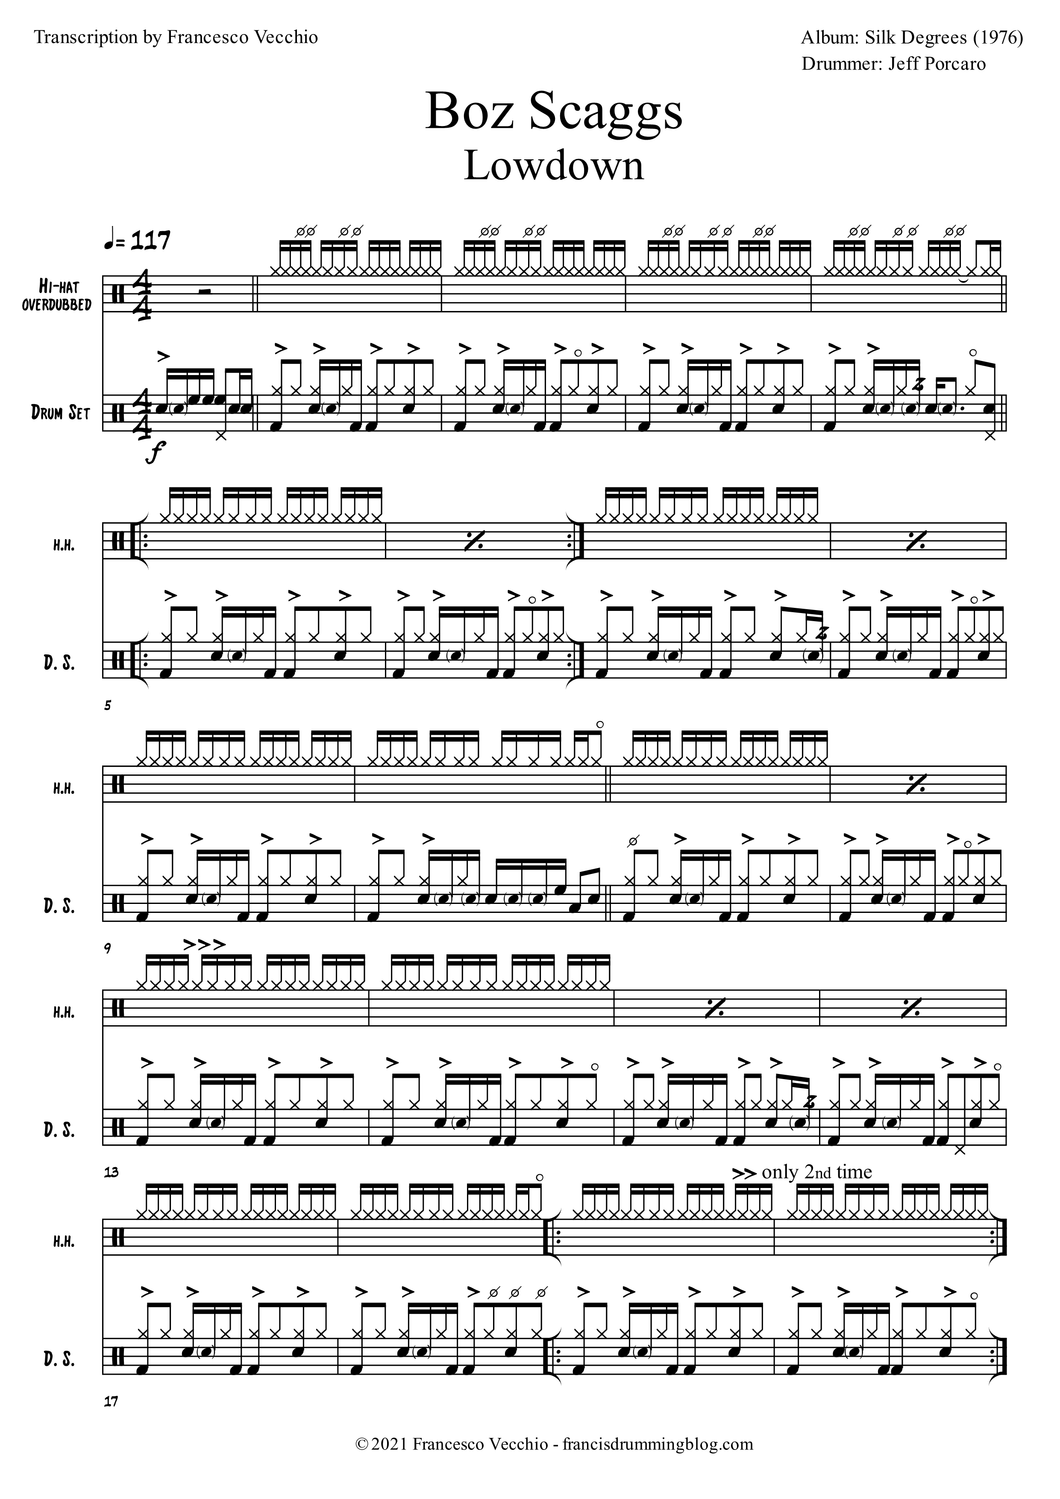 Lowdown - Boz Scaggs - Full Drum Transcription / Drum Sheet Music - FrancisDrummingBlog.com